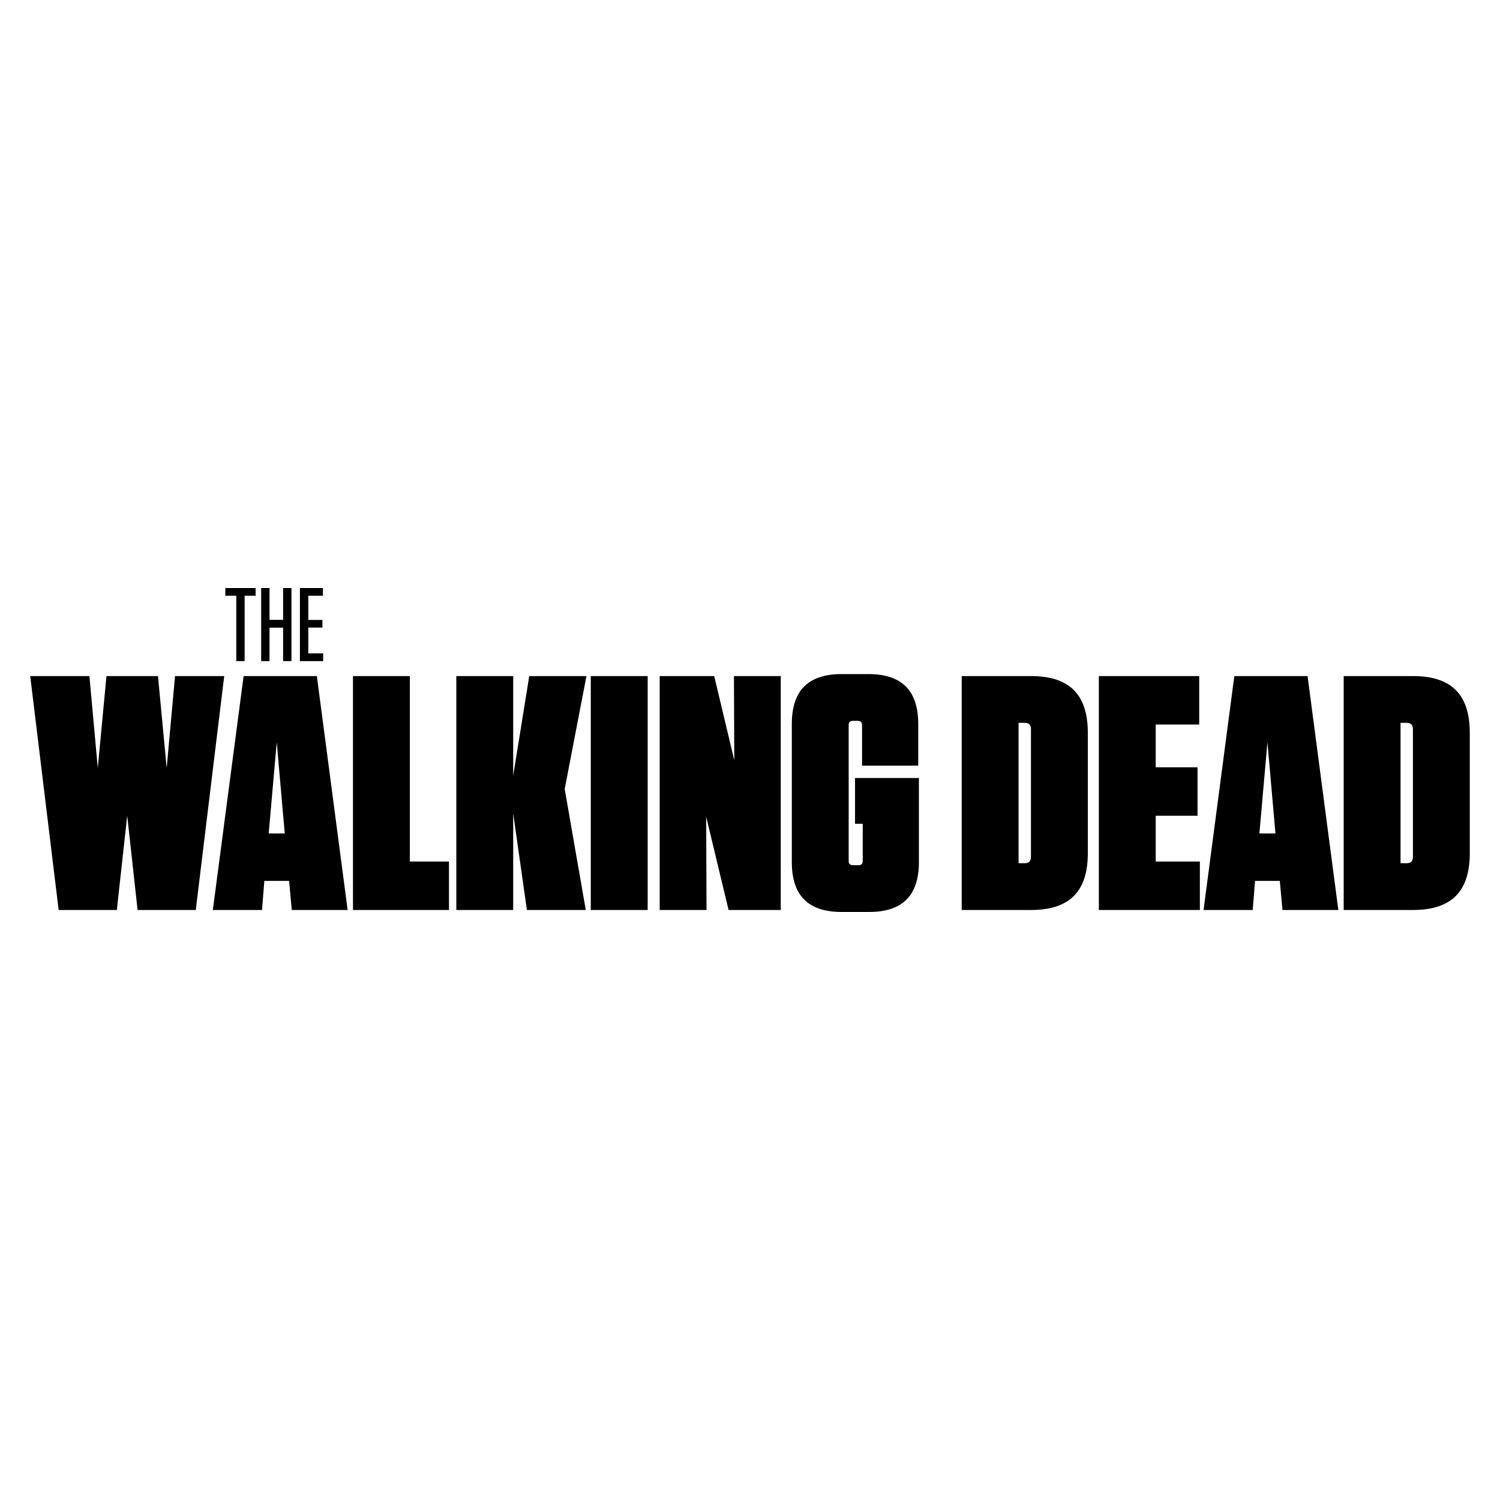 The Walking Dead logo black version PNG